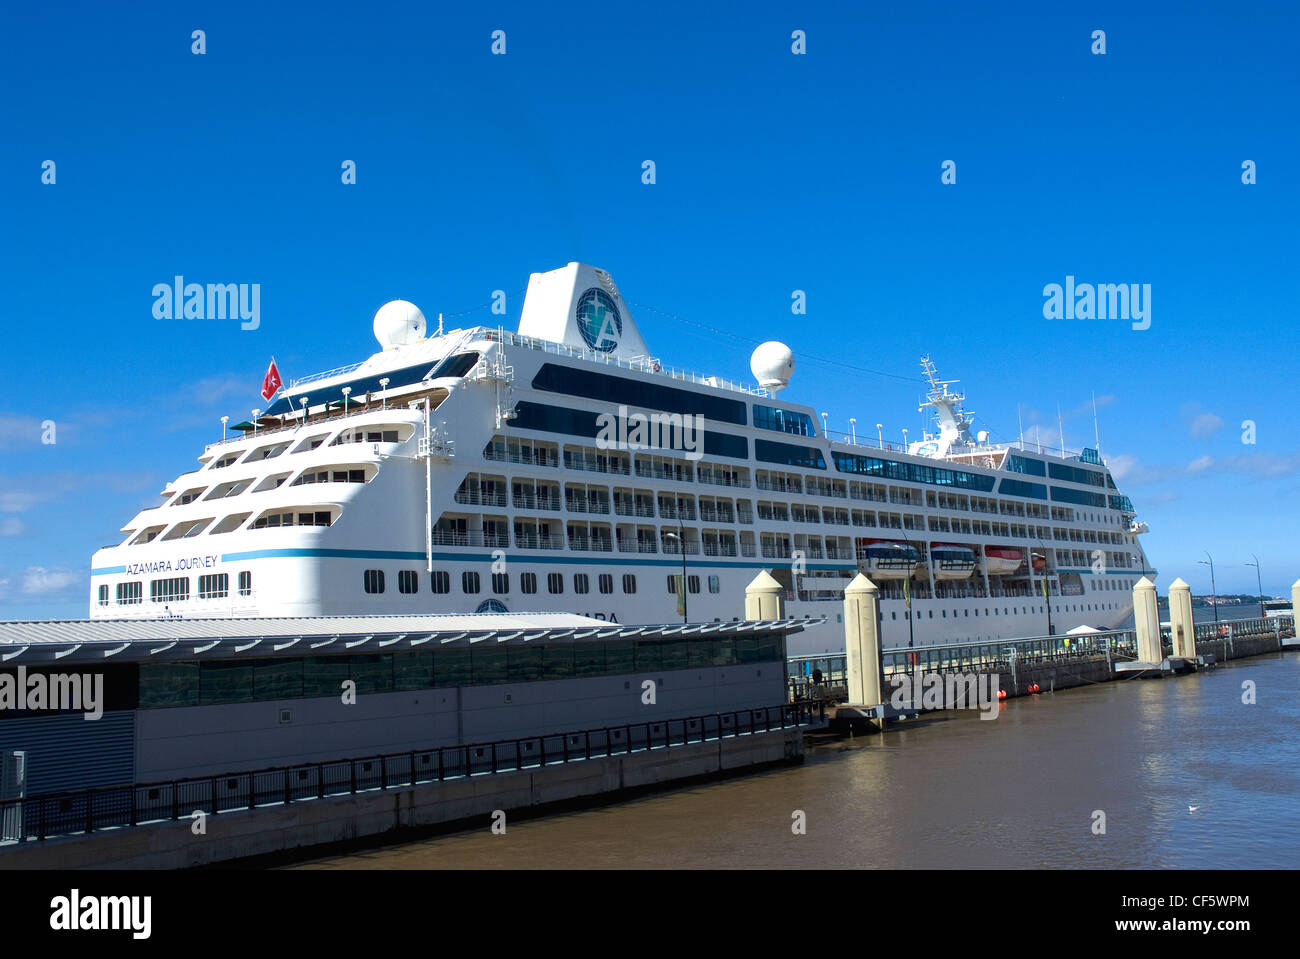 The Azamara Journey cruise ship docked in Liverpool. Stock Photo